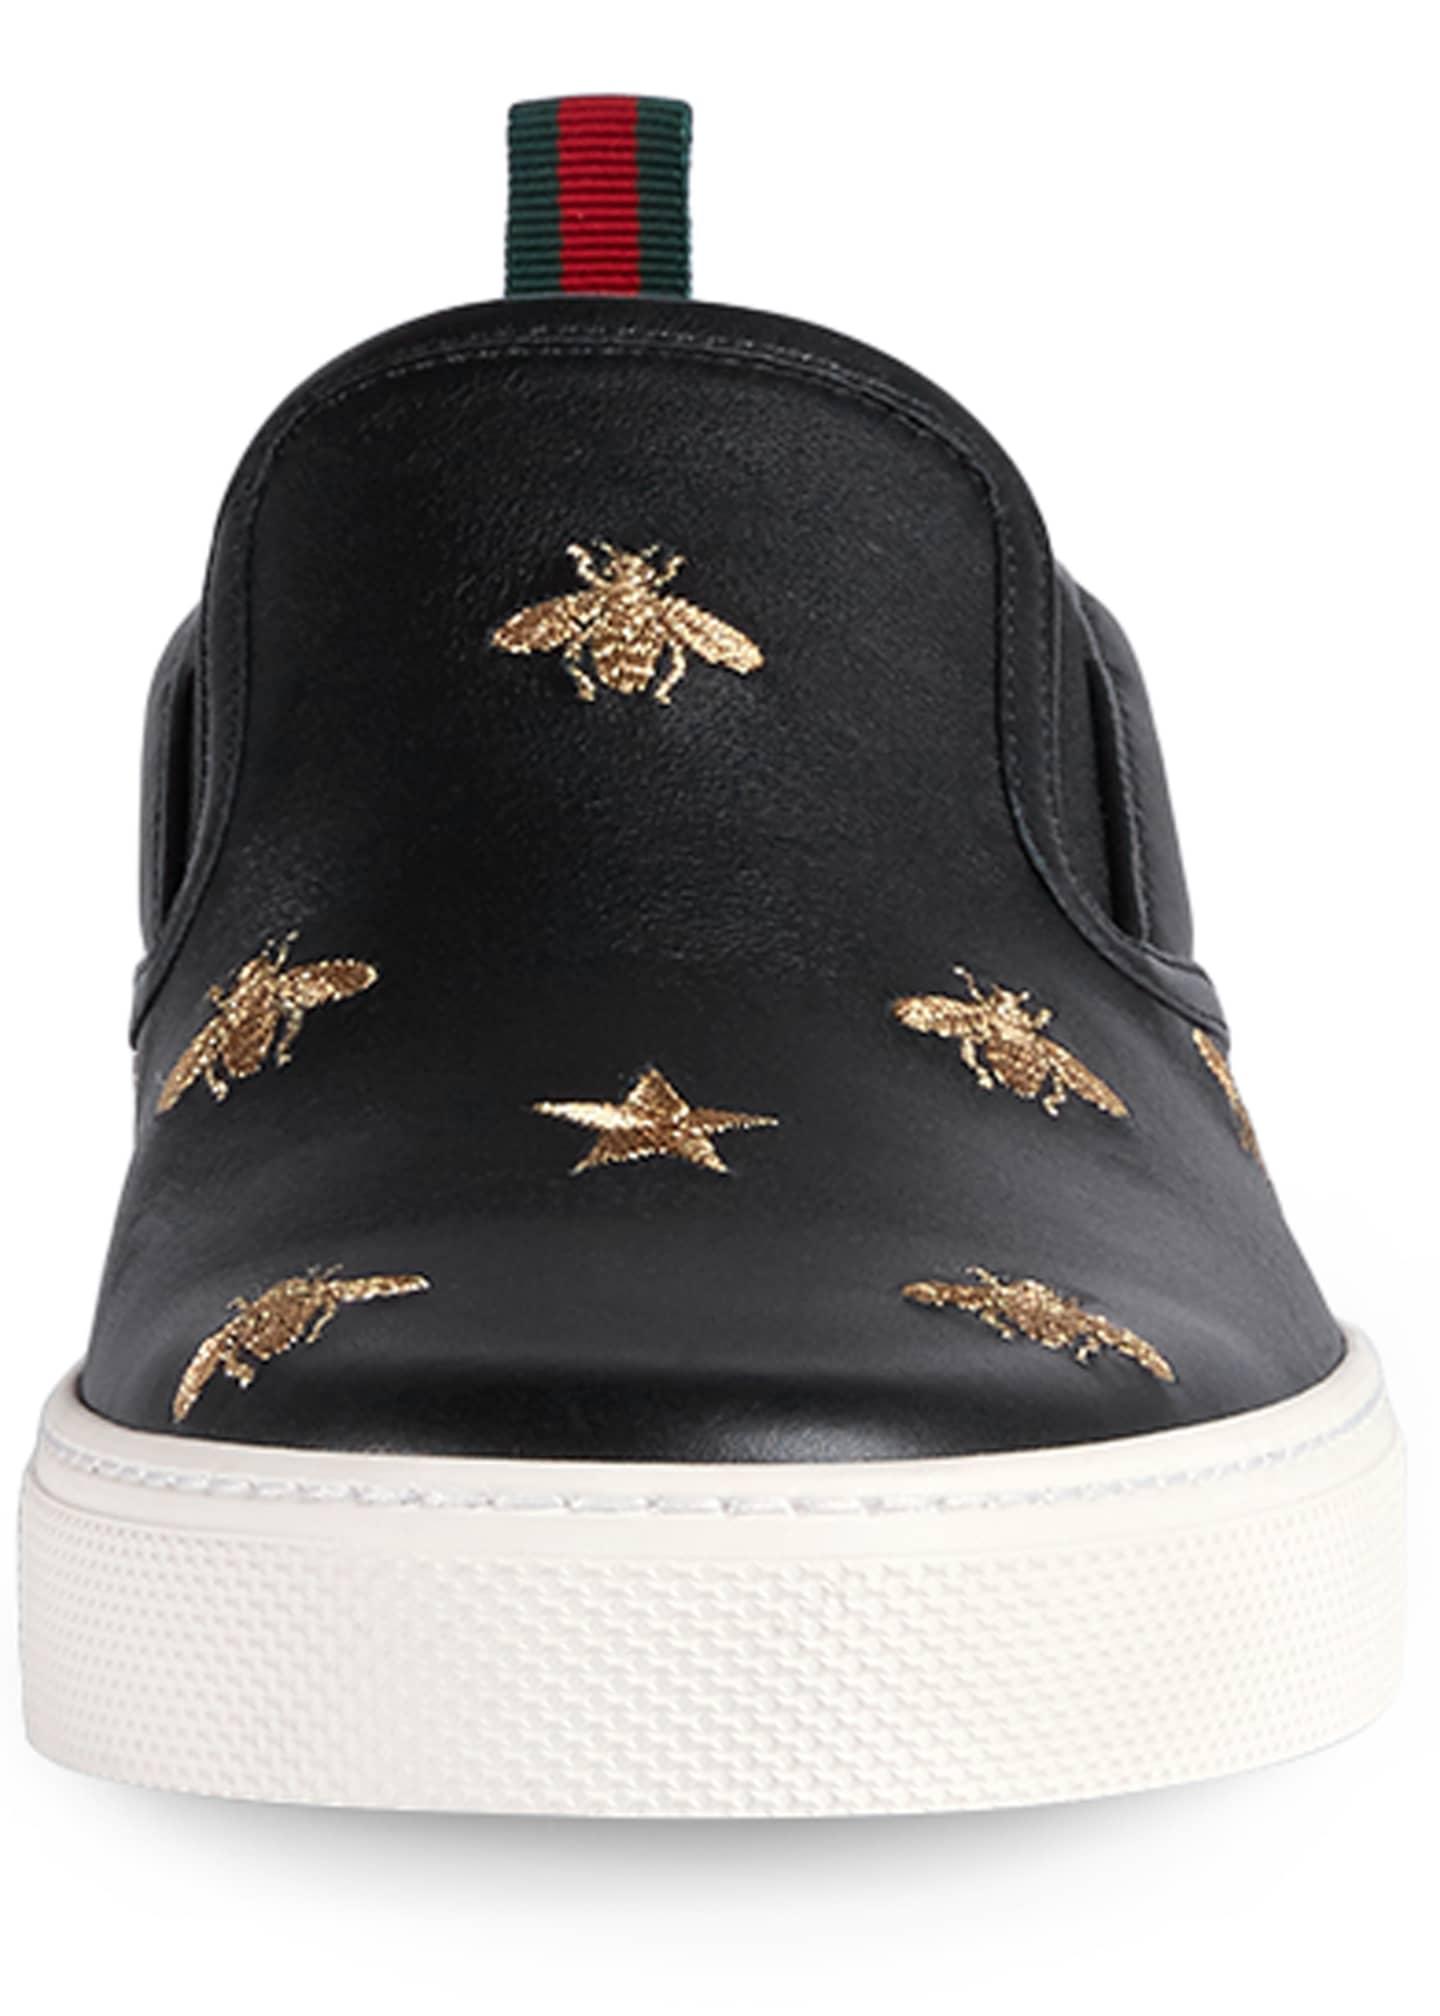 Buy Gucci Slip-On Sneakers for Men Online